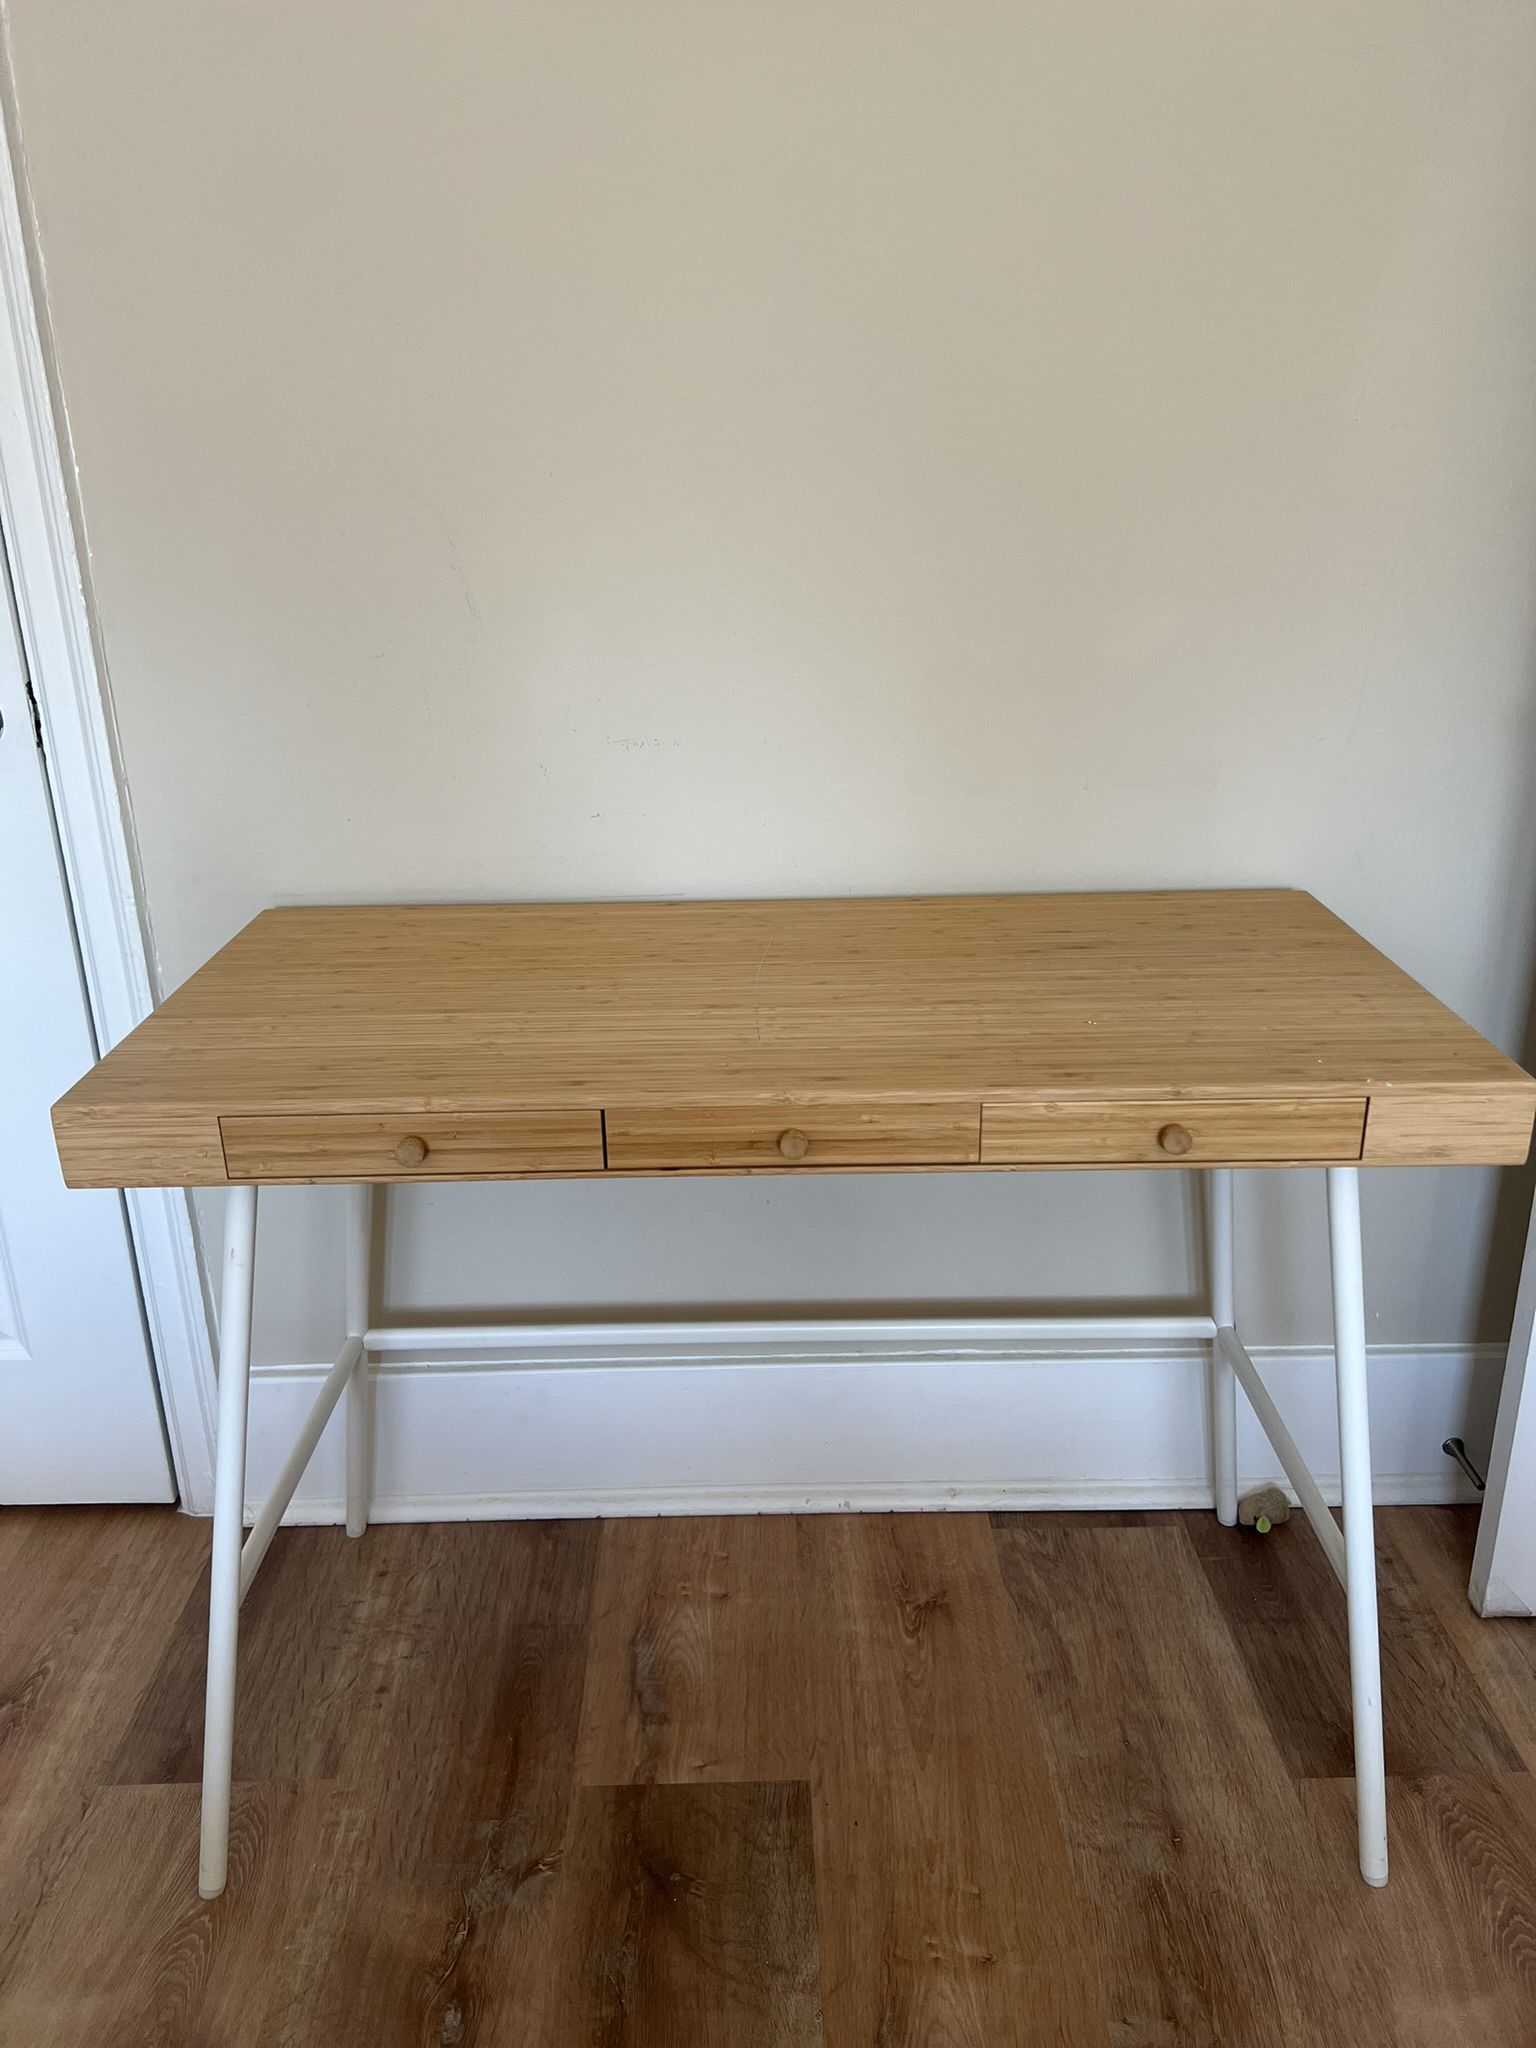 Ikea Bamboo Boho Desk For Sale - Used Less Than A Year